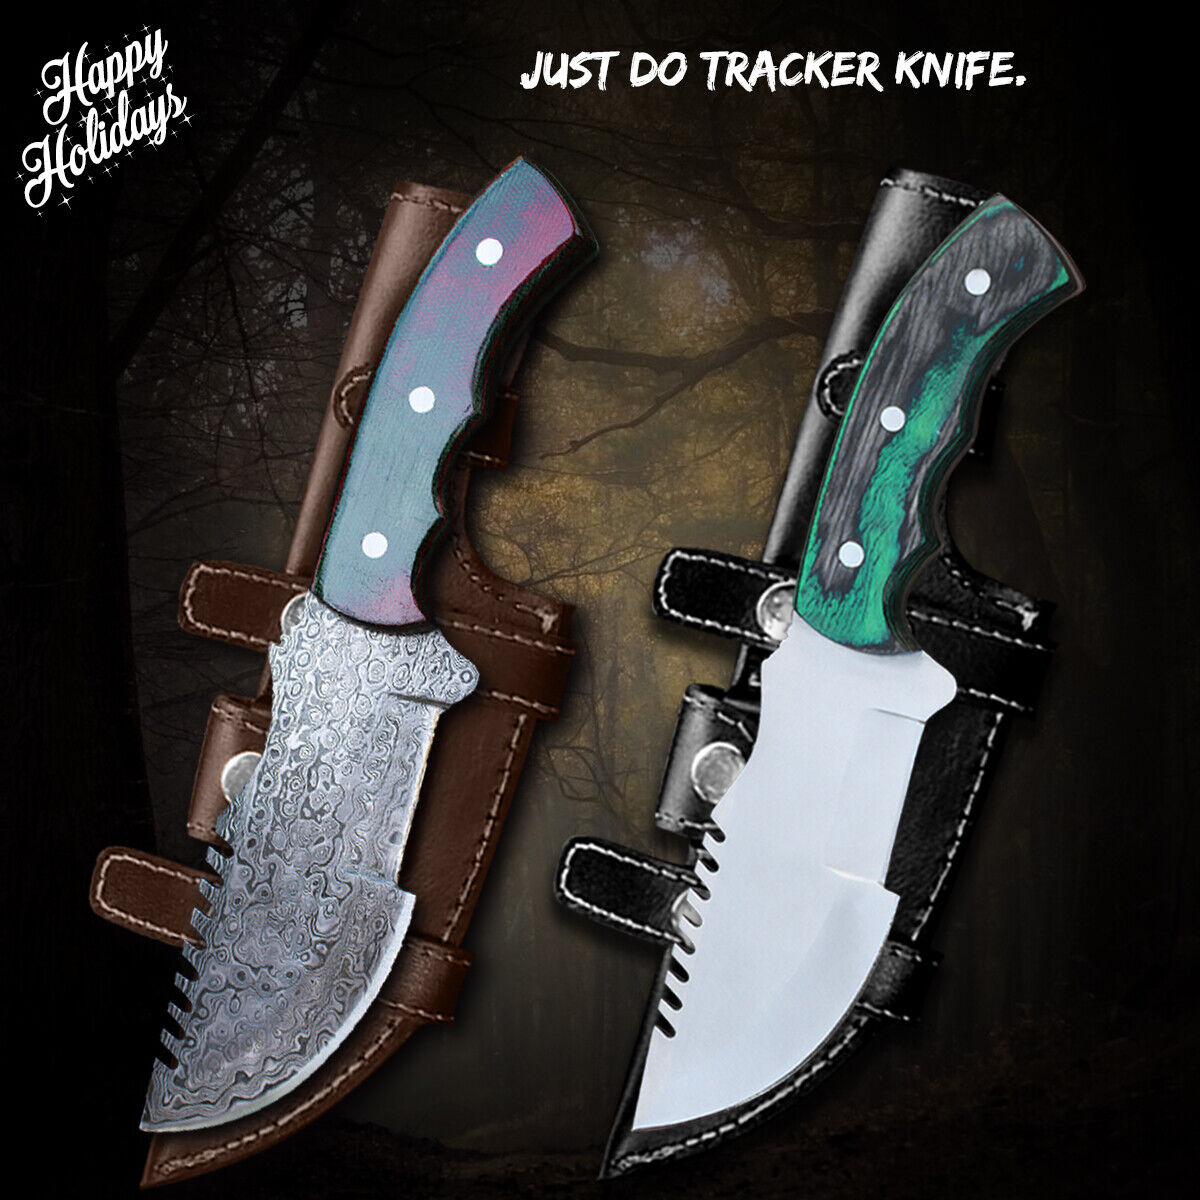 TRACKER® Stainless Steel Tracker Knife 2 pcs Set, Survival & Outdoor Knife Set